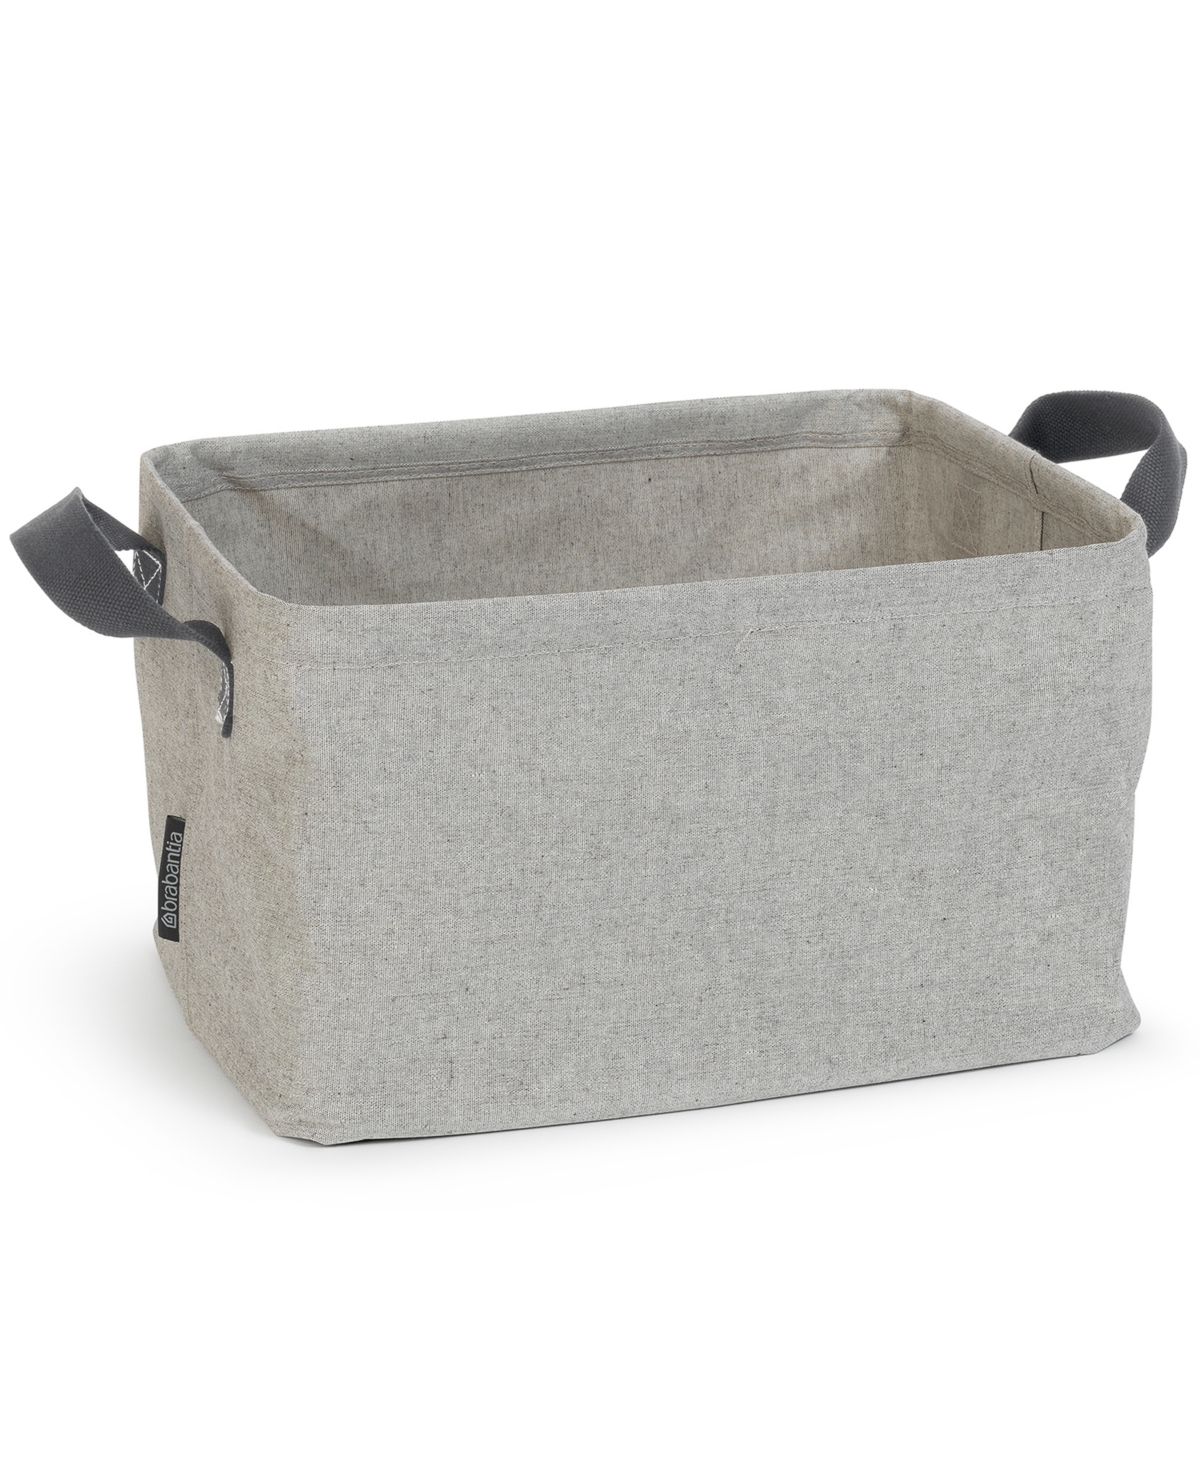 9.2-Gallon Foldable Laundry Basket - Gray